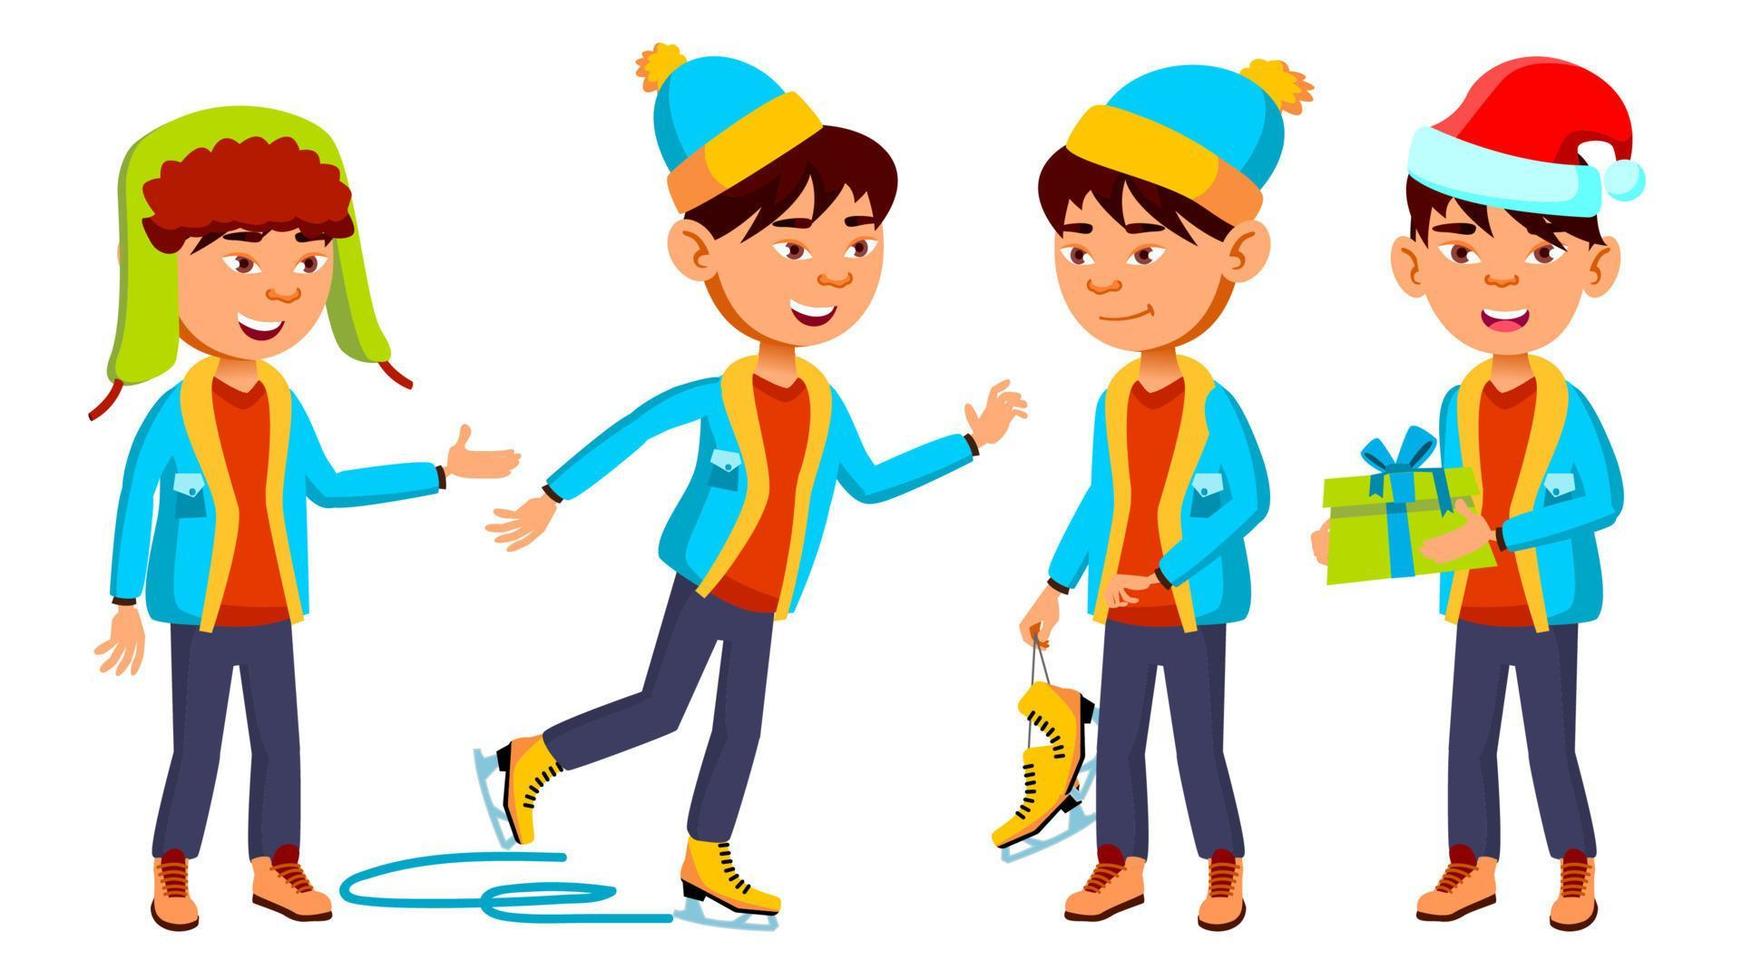 Asian Boy Schoolboy Set Vector. Primary School Child. Cute Child. Happiness Enjoyment. Chrastmas, New Year. For Presentation, Print, Invitation Design. Isolated Cartoon Illustration vector